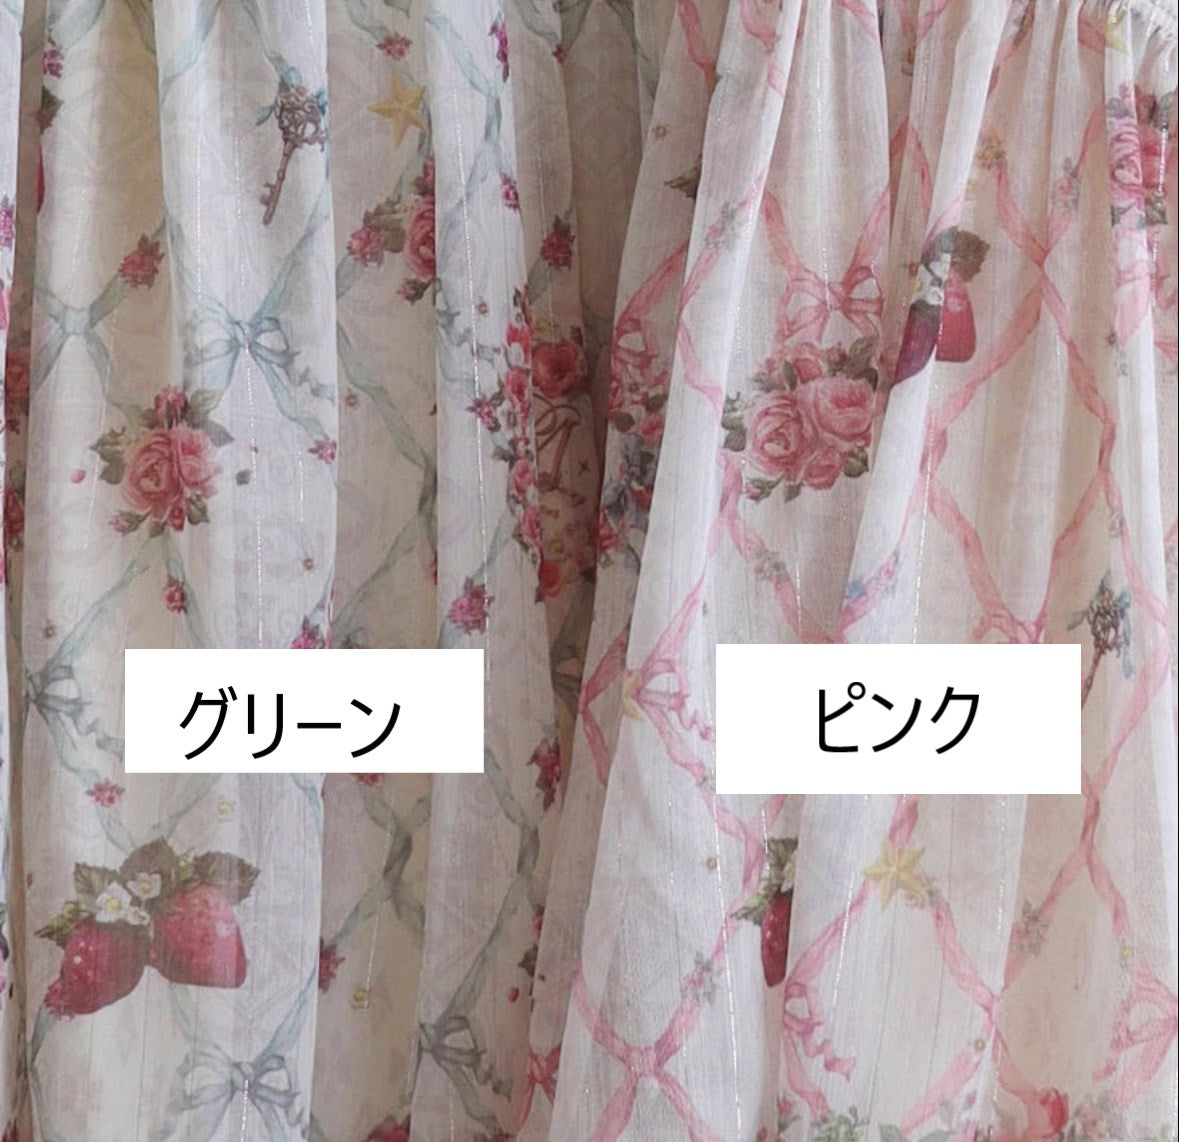 Secret Strawberry Garden ジャンパースカート【2型】